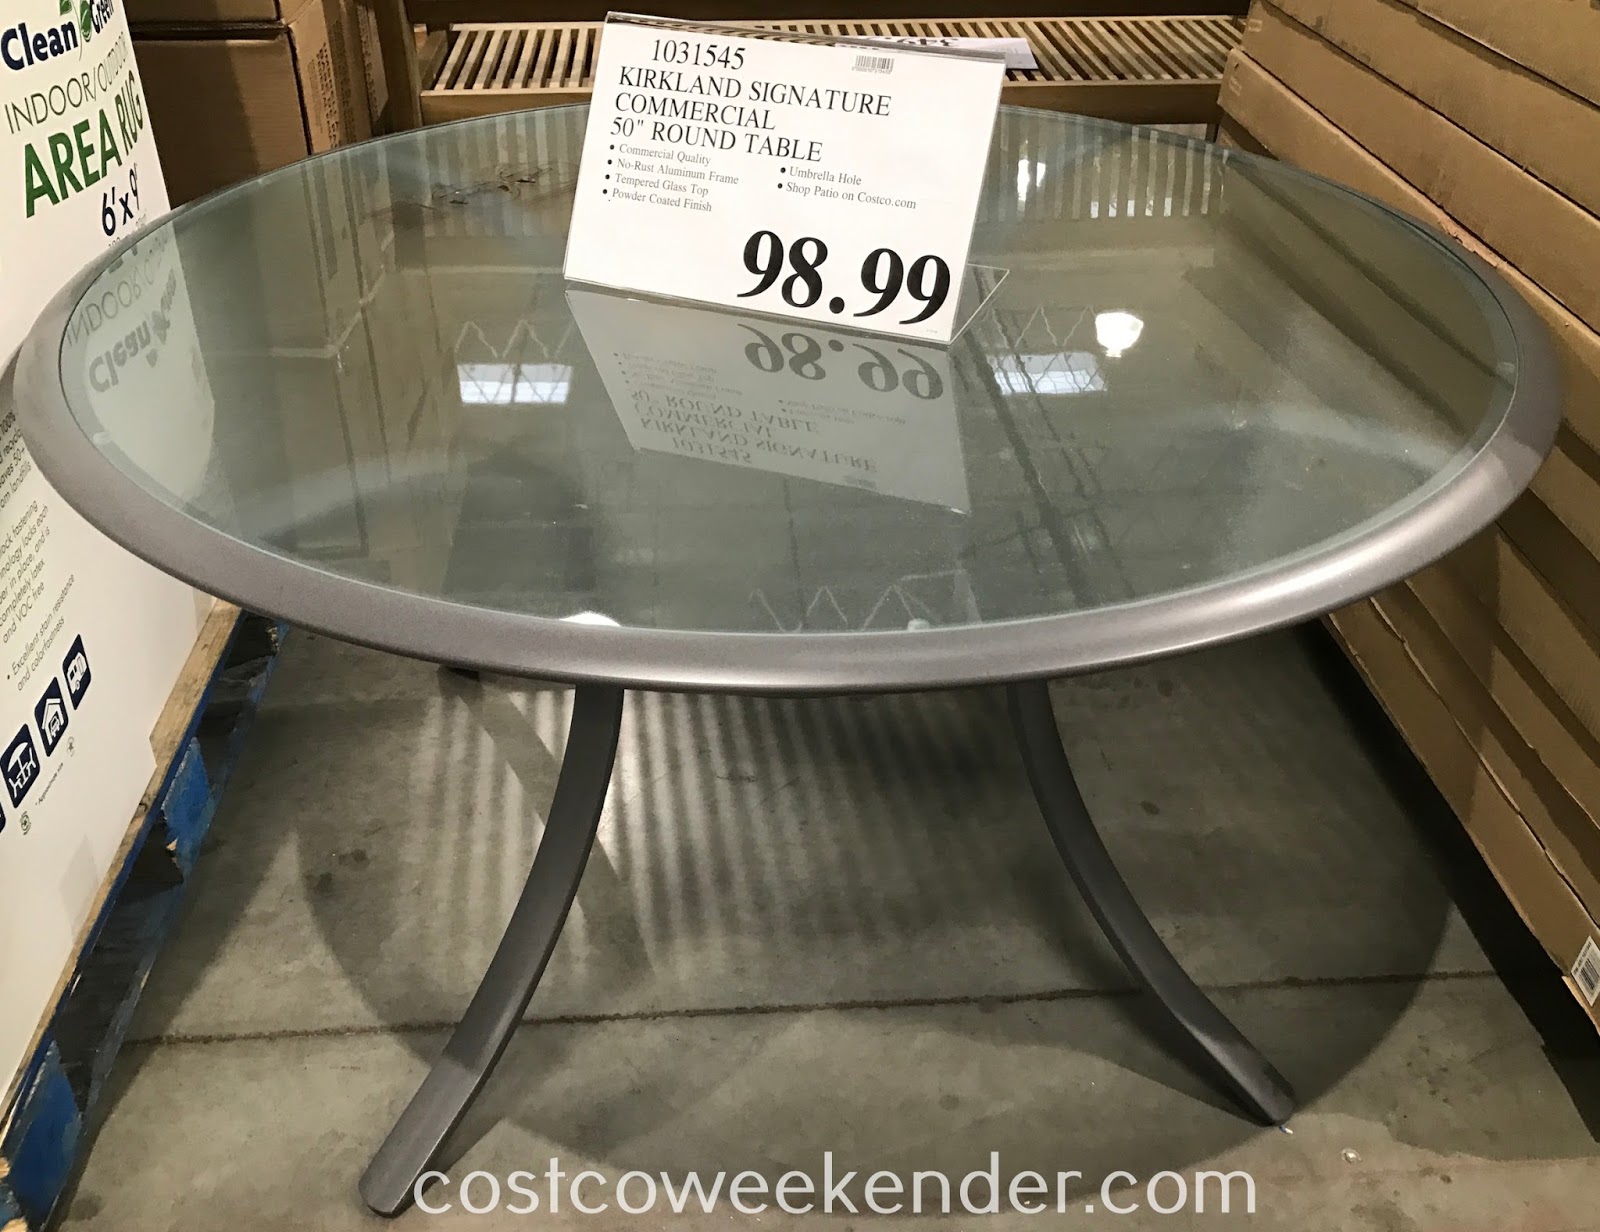 Kirkland 50 Round Commercial Patio Table Costco Weekender